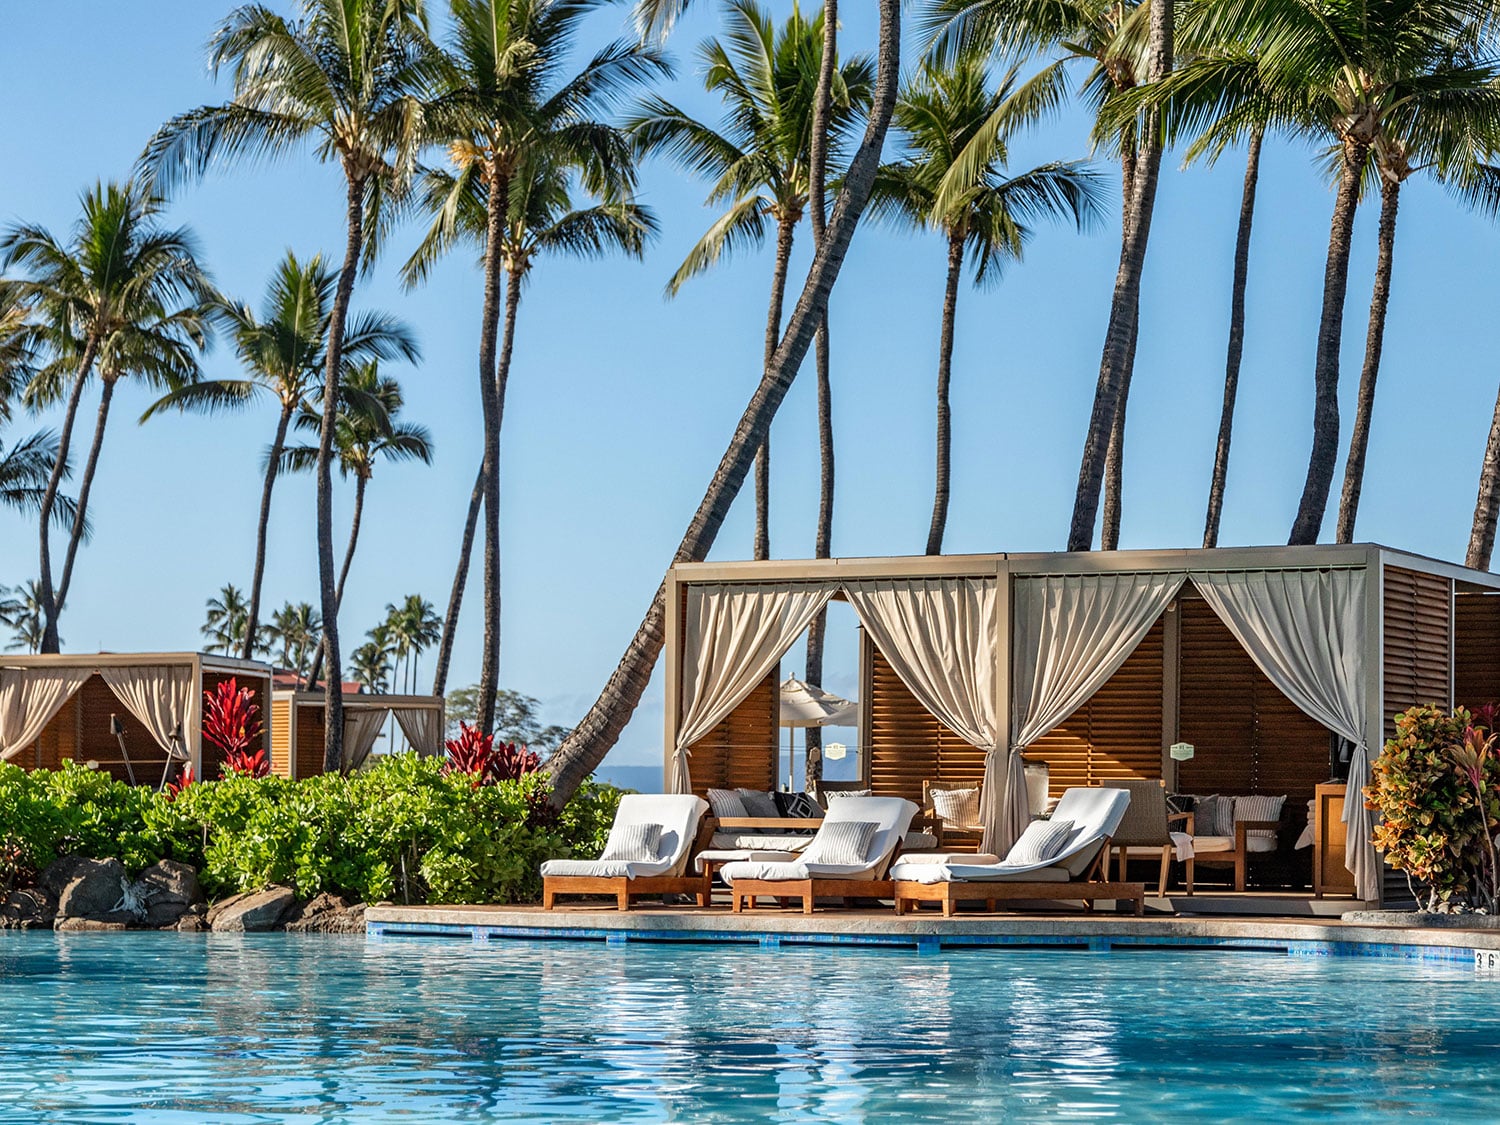 Some of the new pool cabanas at Grand Wailea Maui, A Waldorf Astoria Resort.